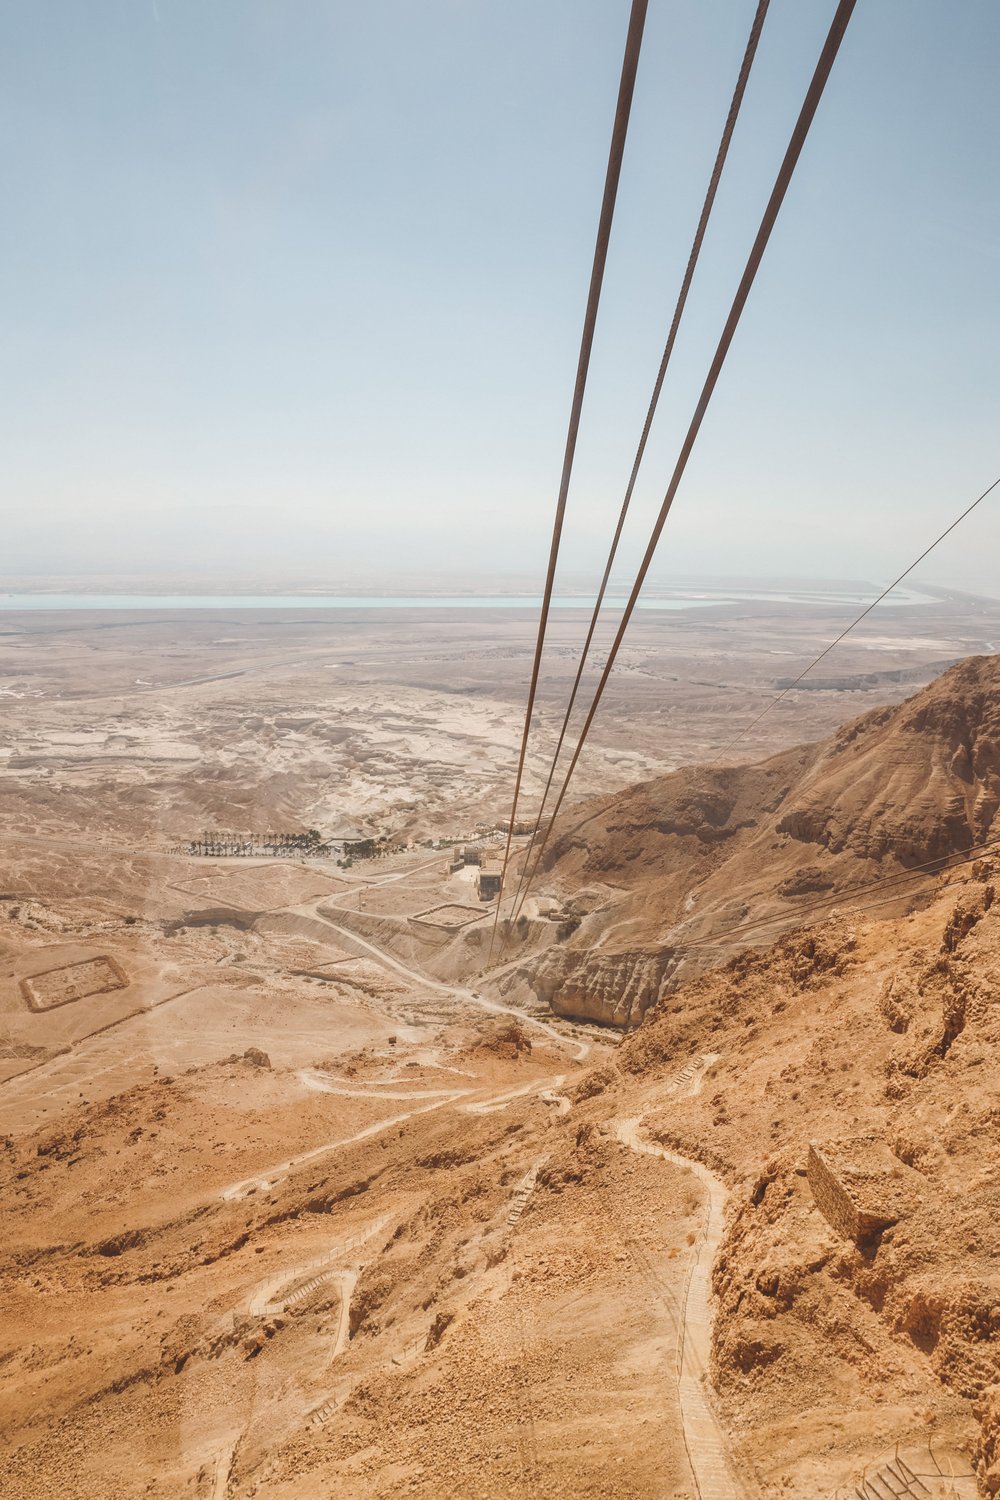 The gondola in Masada - Dead Sea - Israel